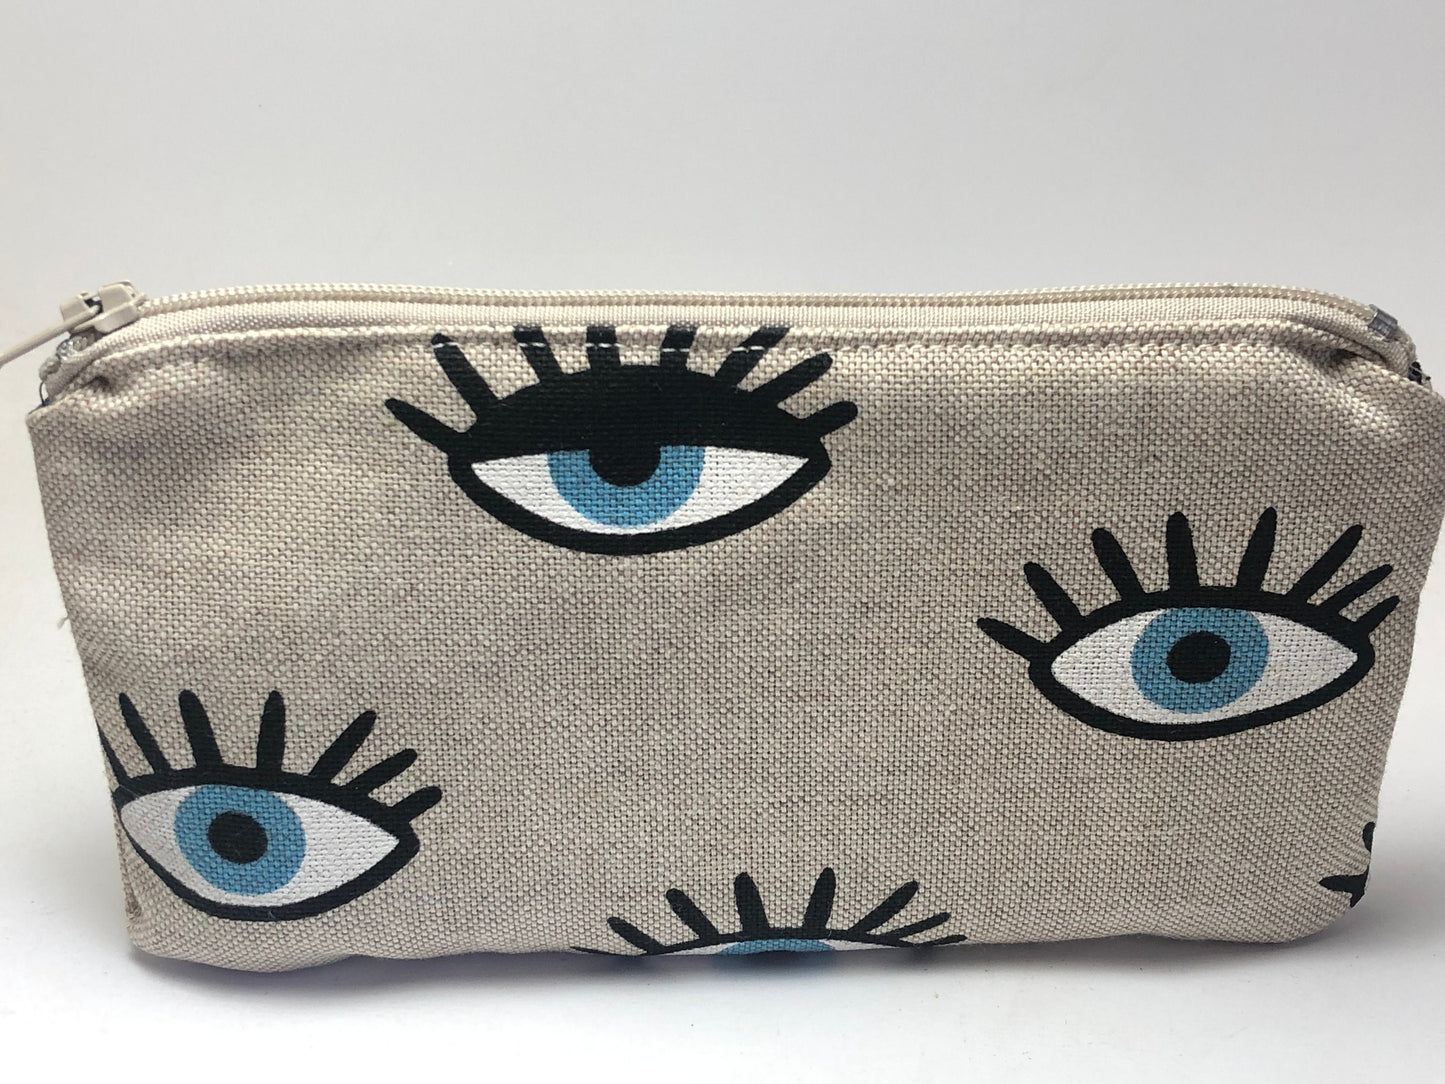 Evil eye fabric purse with zipper - Handmade pouch - Made in Greece - Greek gift